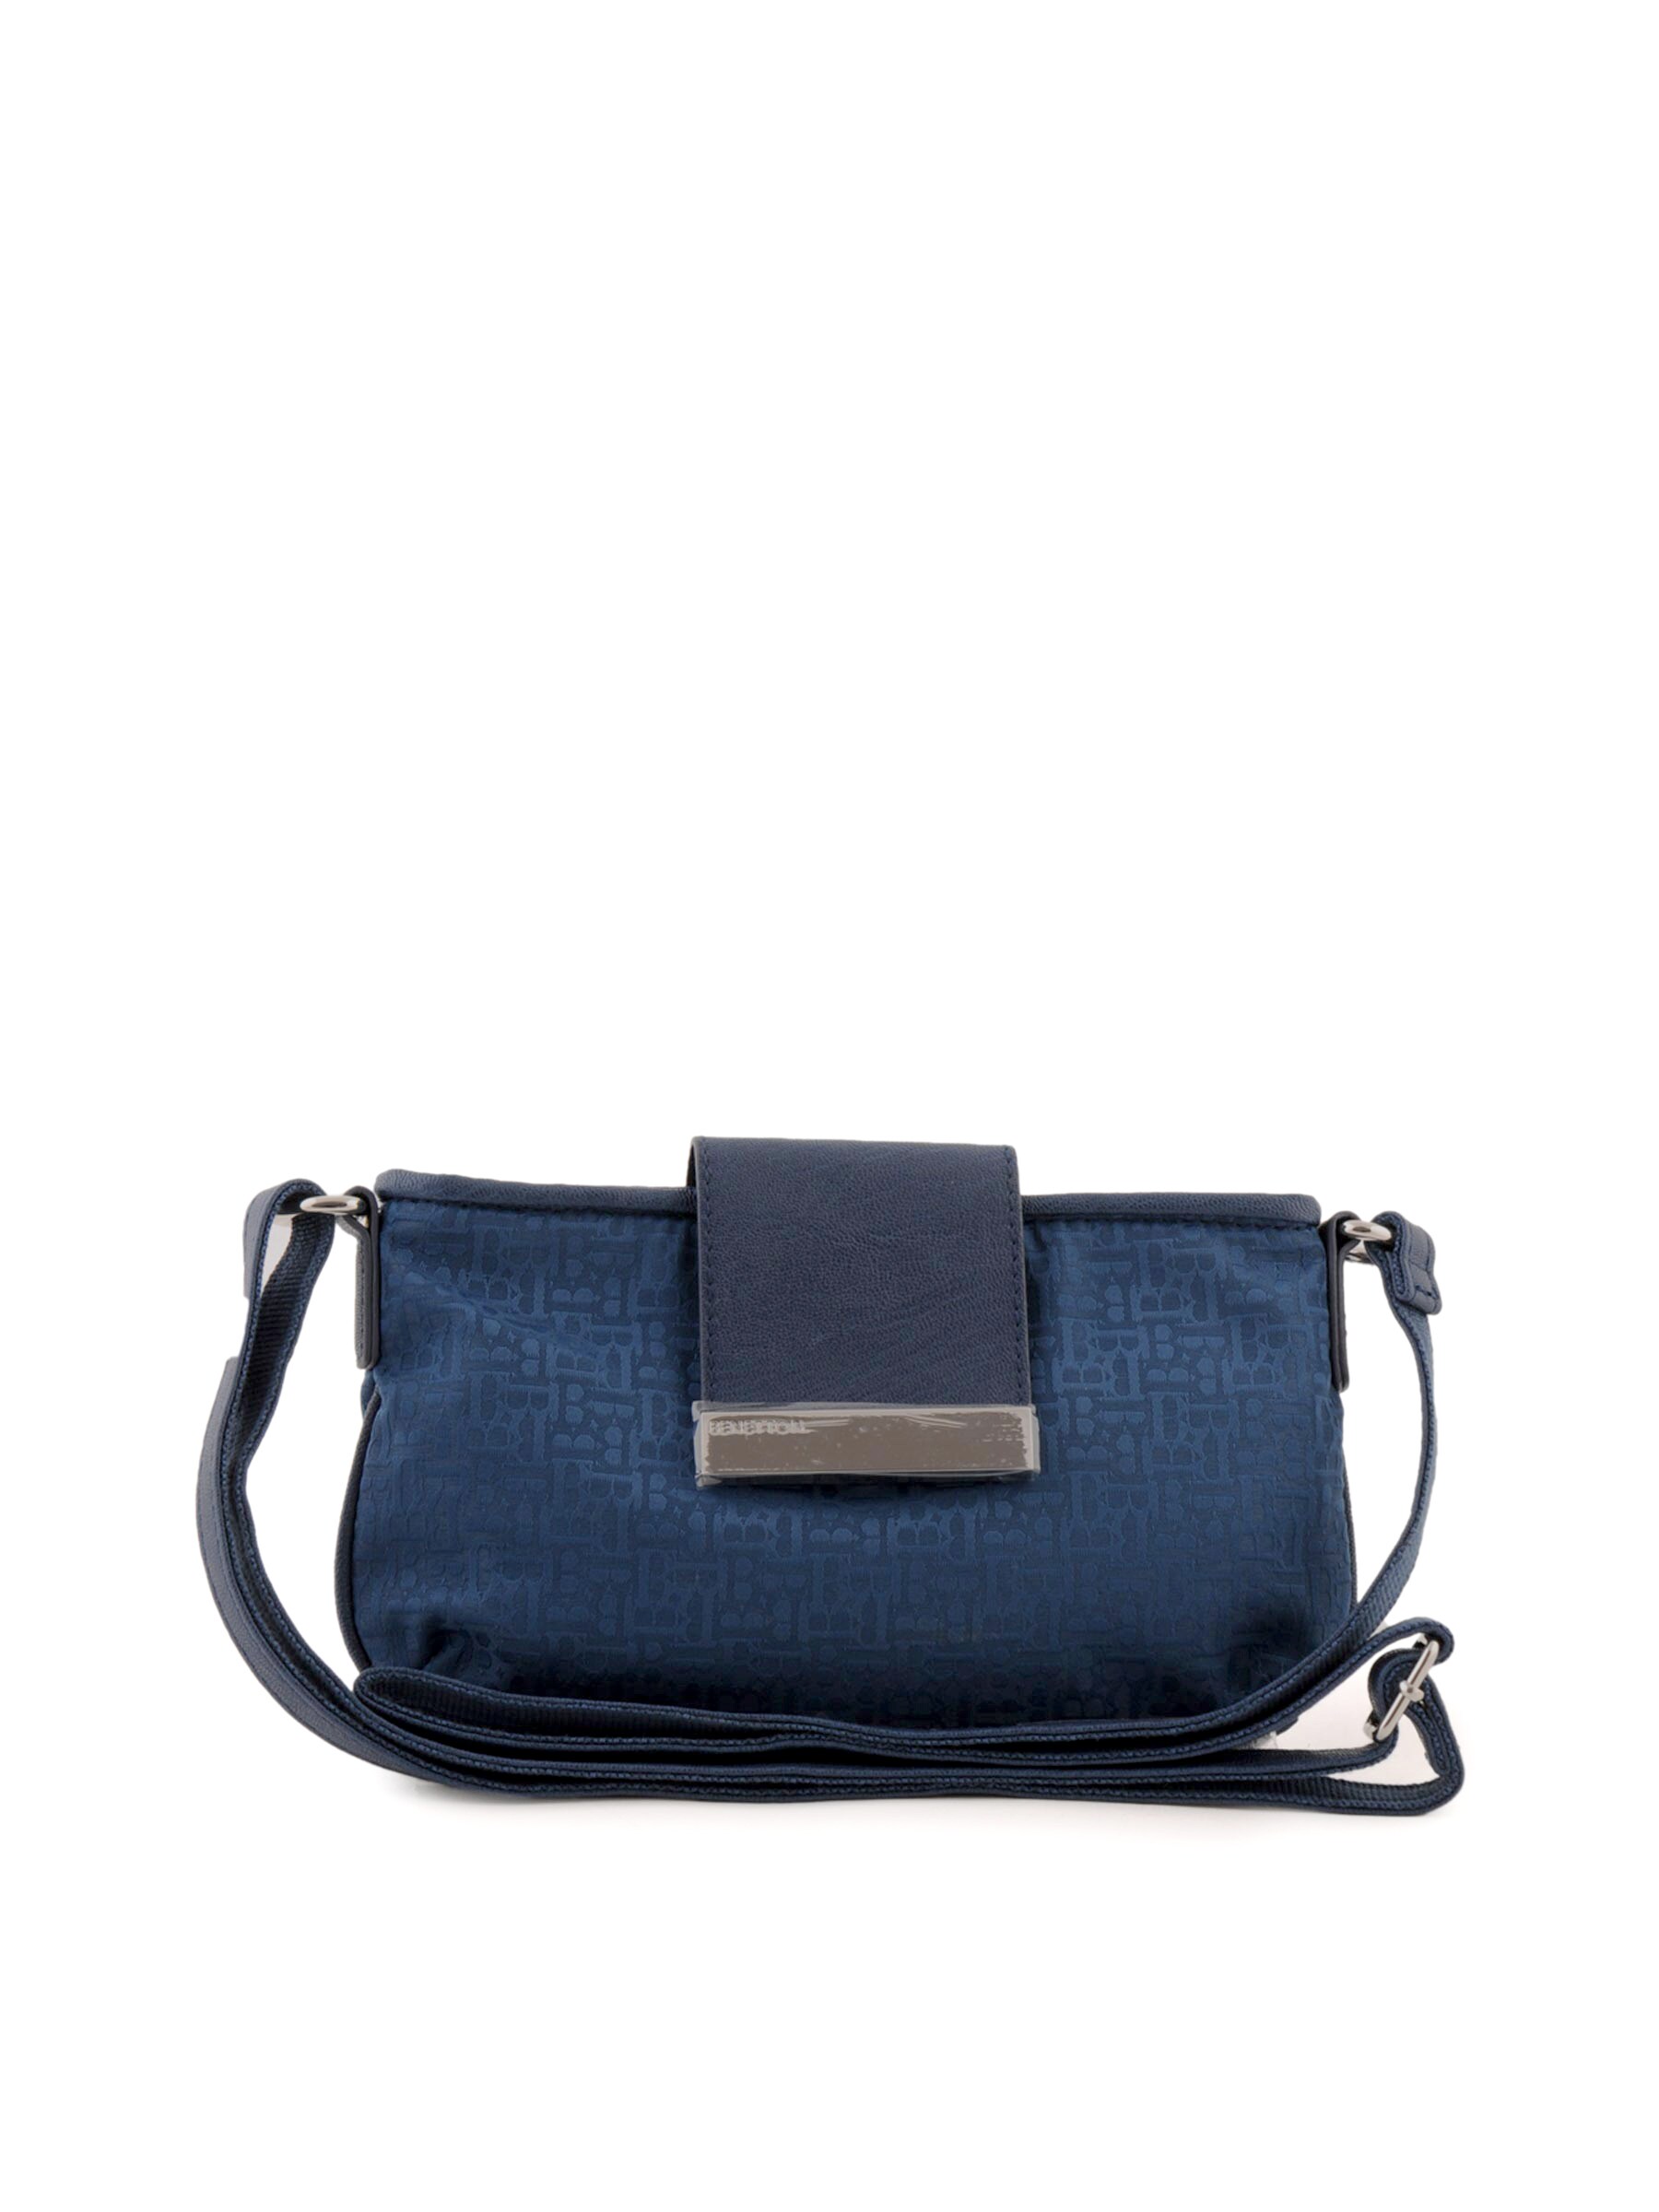 United Colors of Benetton Women Solid Blue Handbags